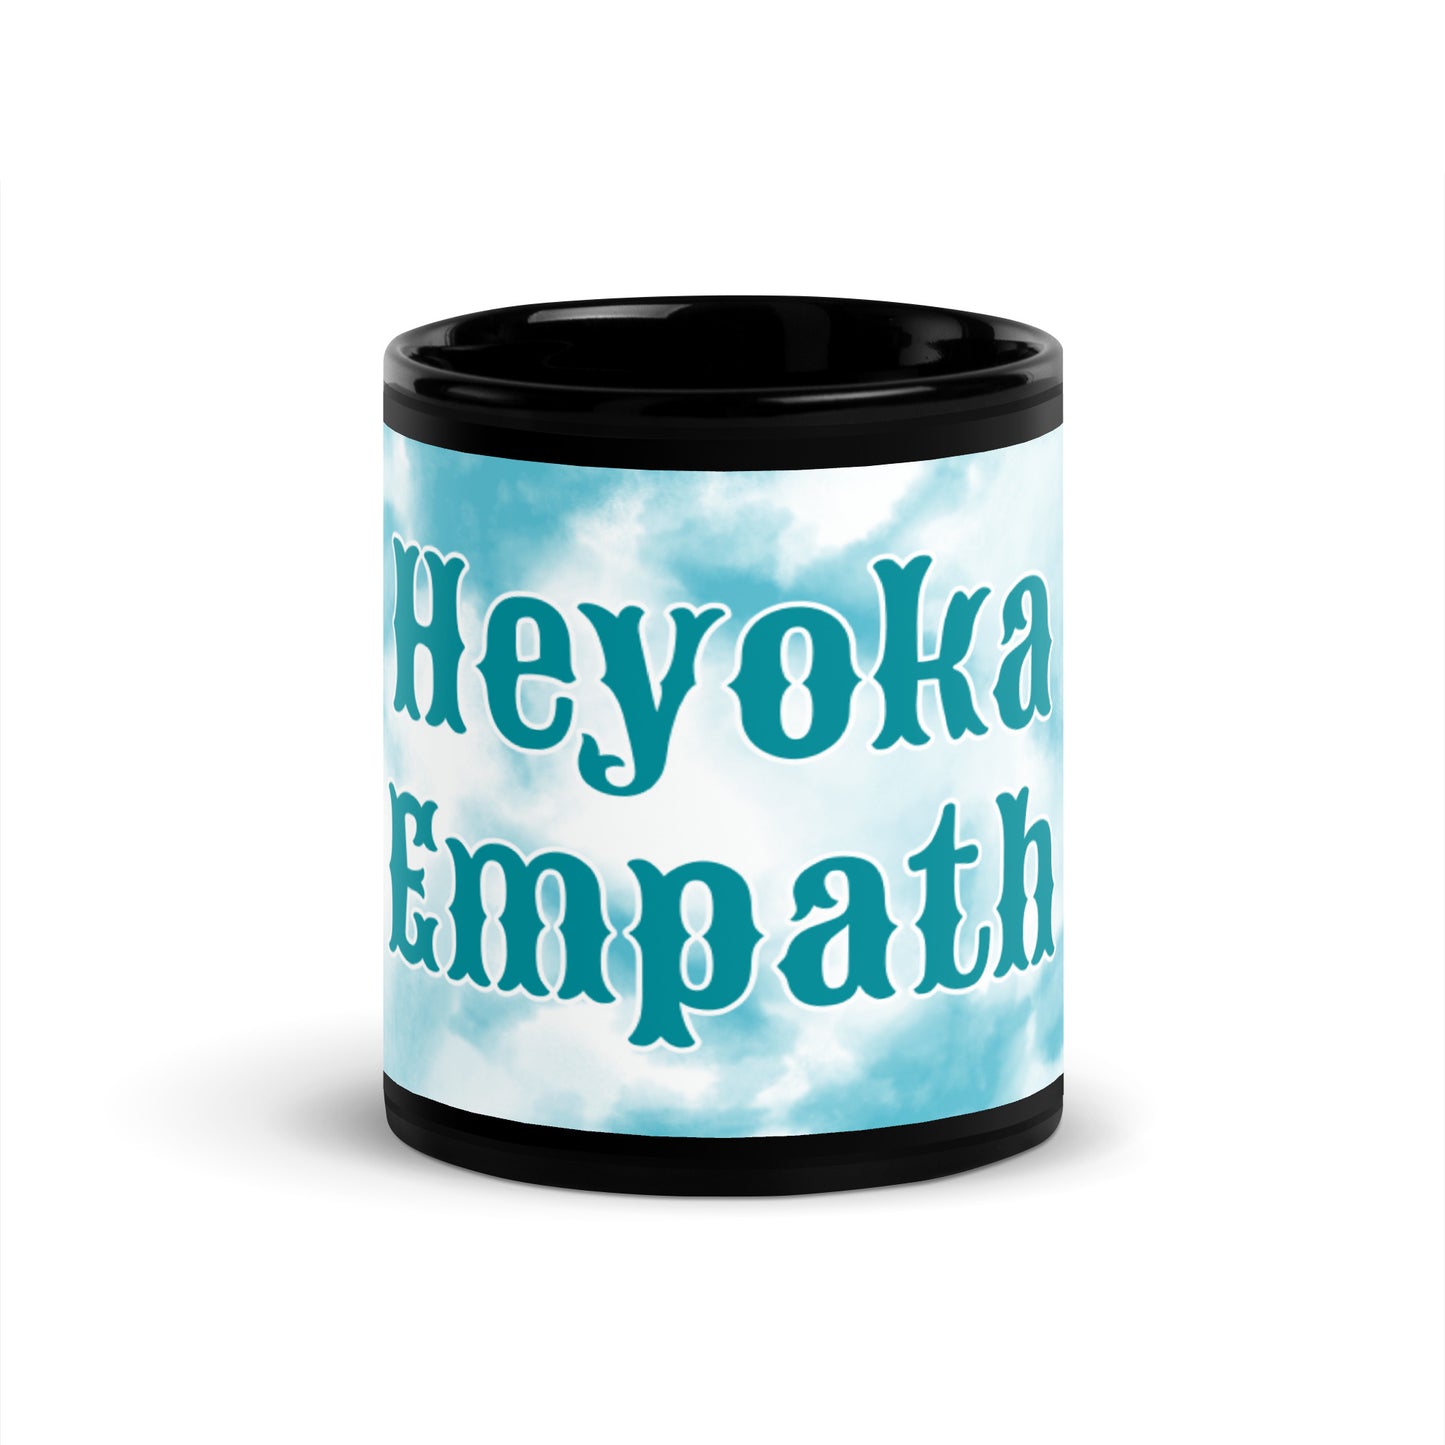 Teal Tie Dye Noir Glossy Mug - Heyoka Empath